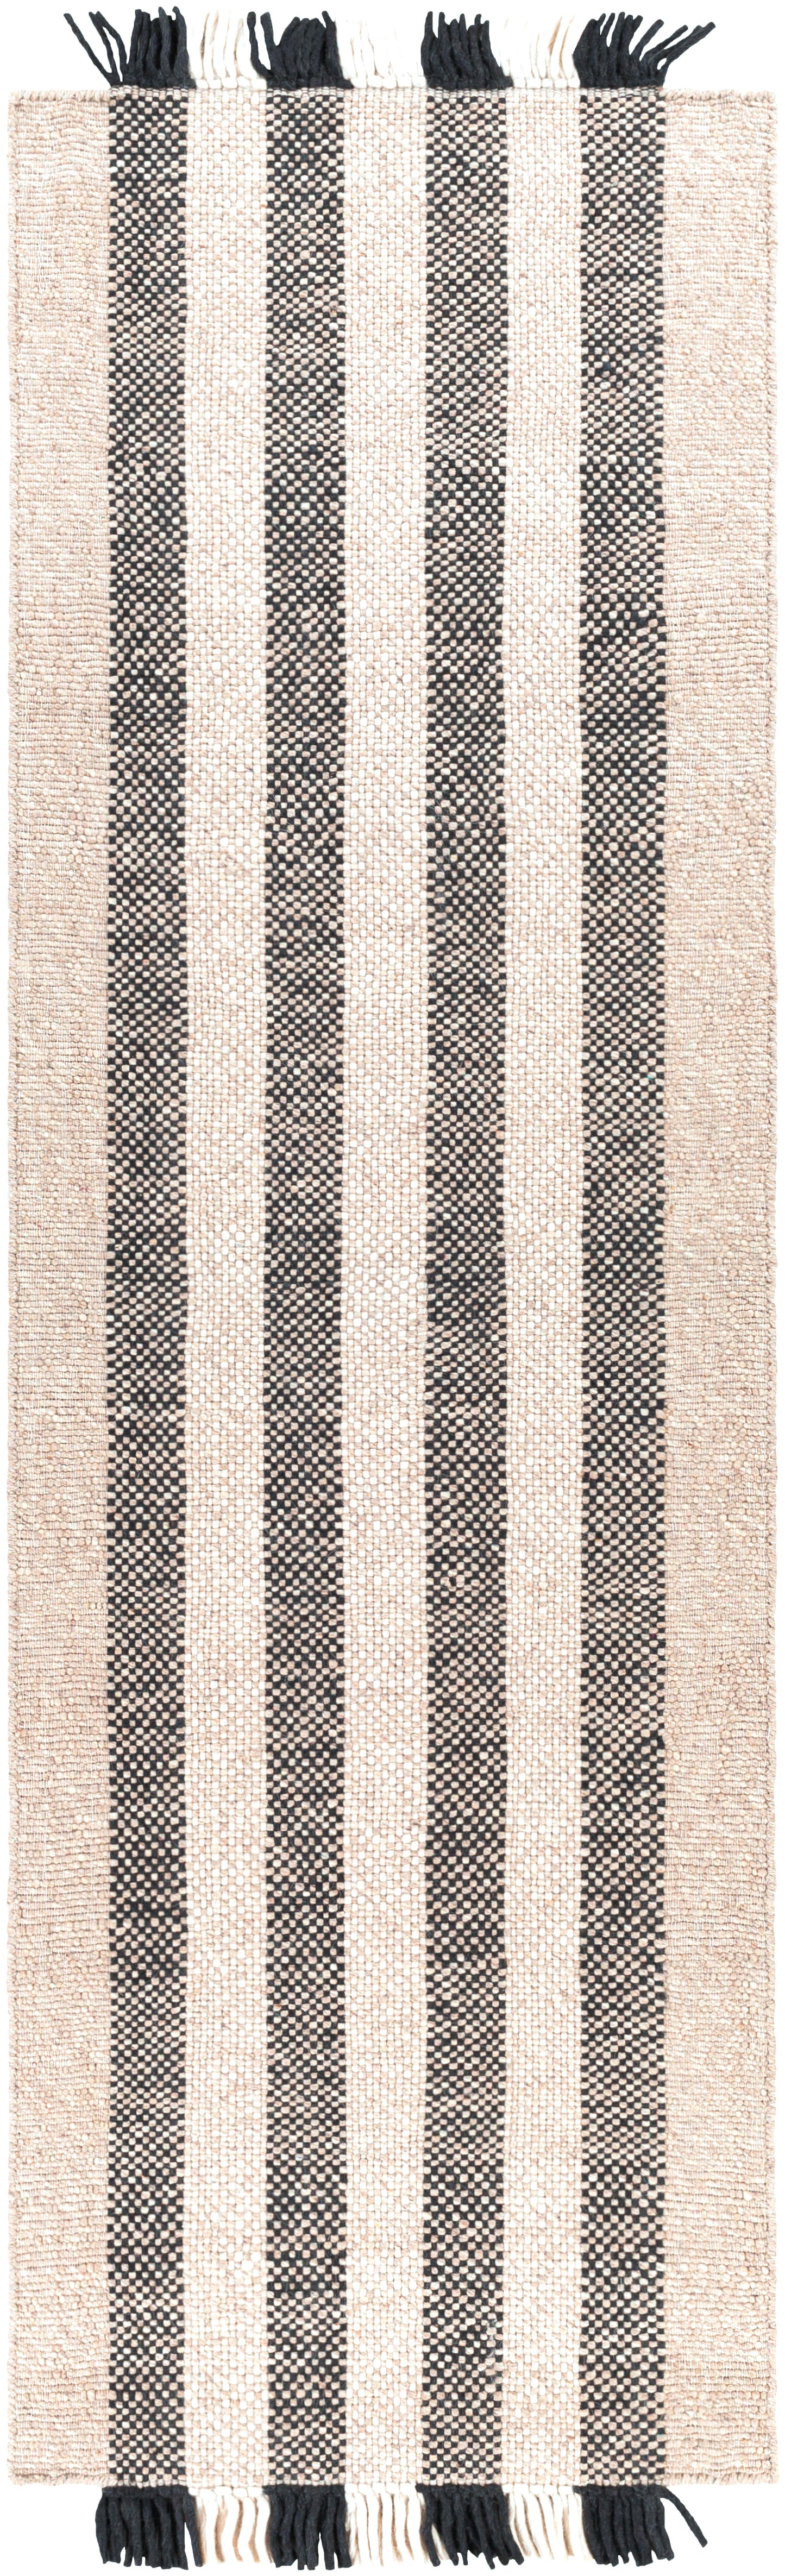 Reliance 27886 Hand Woven Wool Indoor Area Rug by Surya Rugs